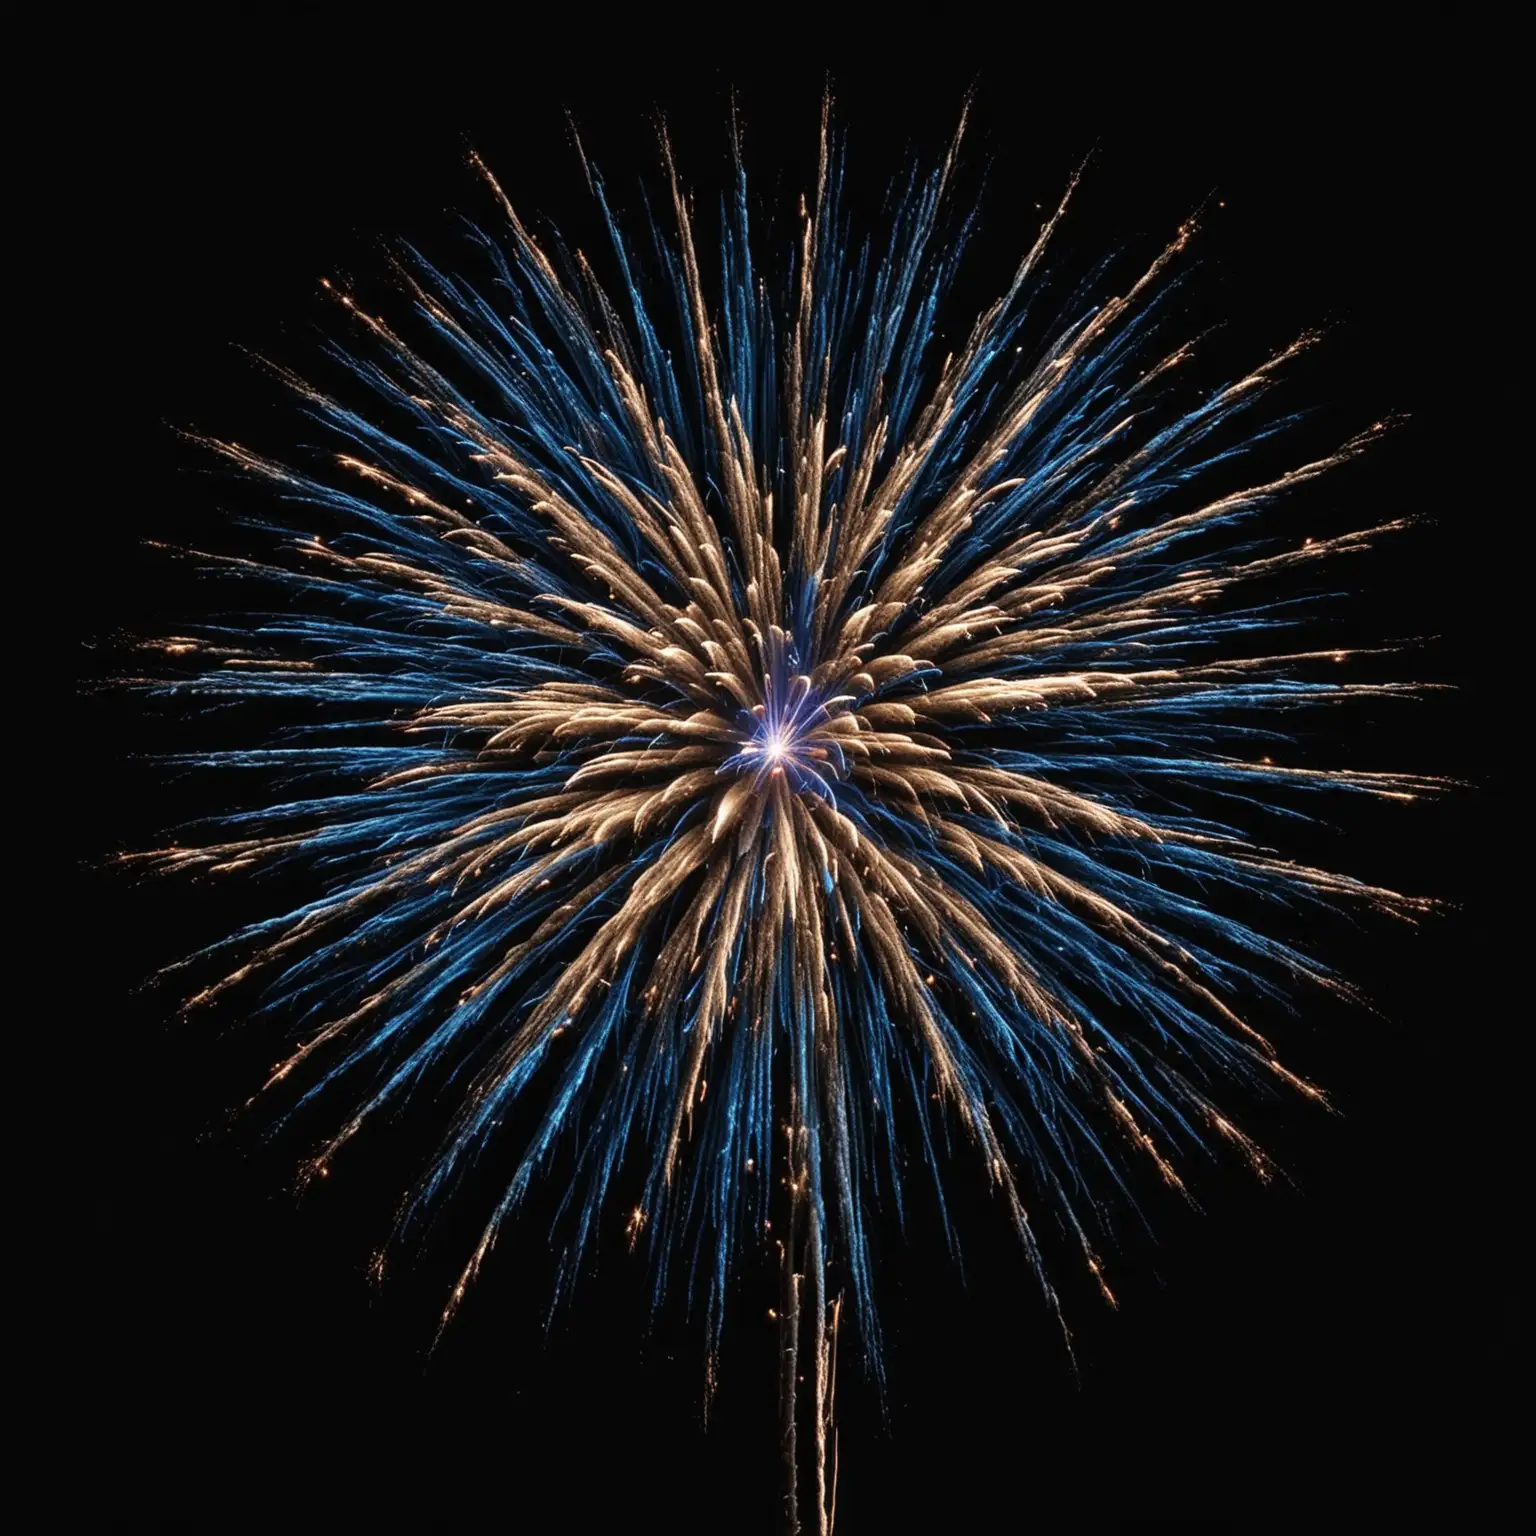 Vibrant Blue Firework Exploding Against a Deep Black Night Sky